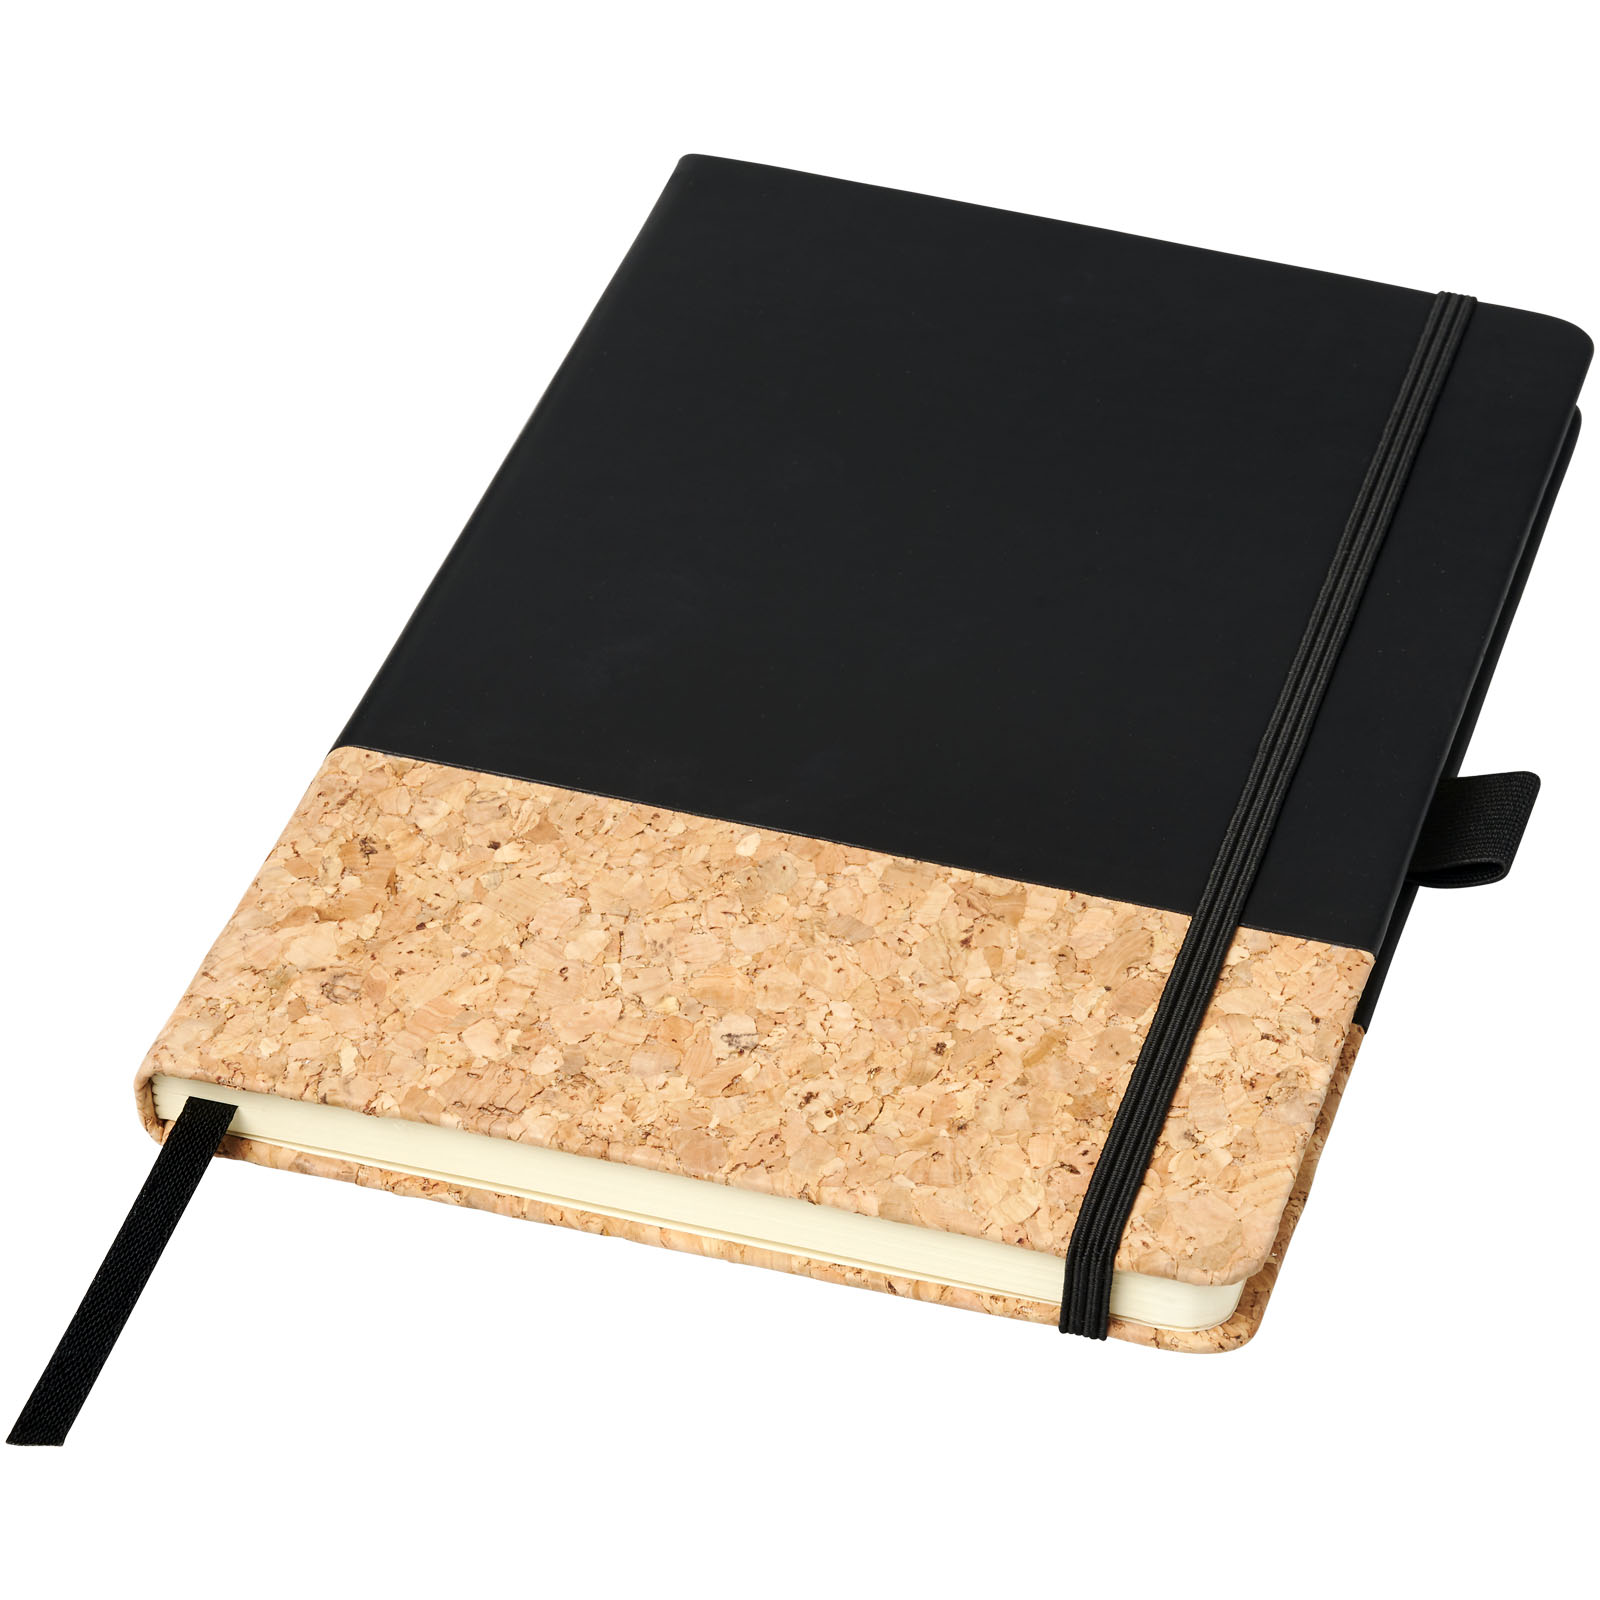 Hard cover notebooks - Evora A5 cork thermo PU notebook